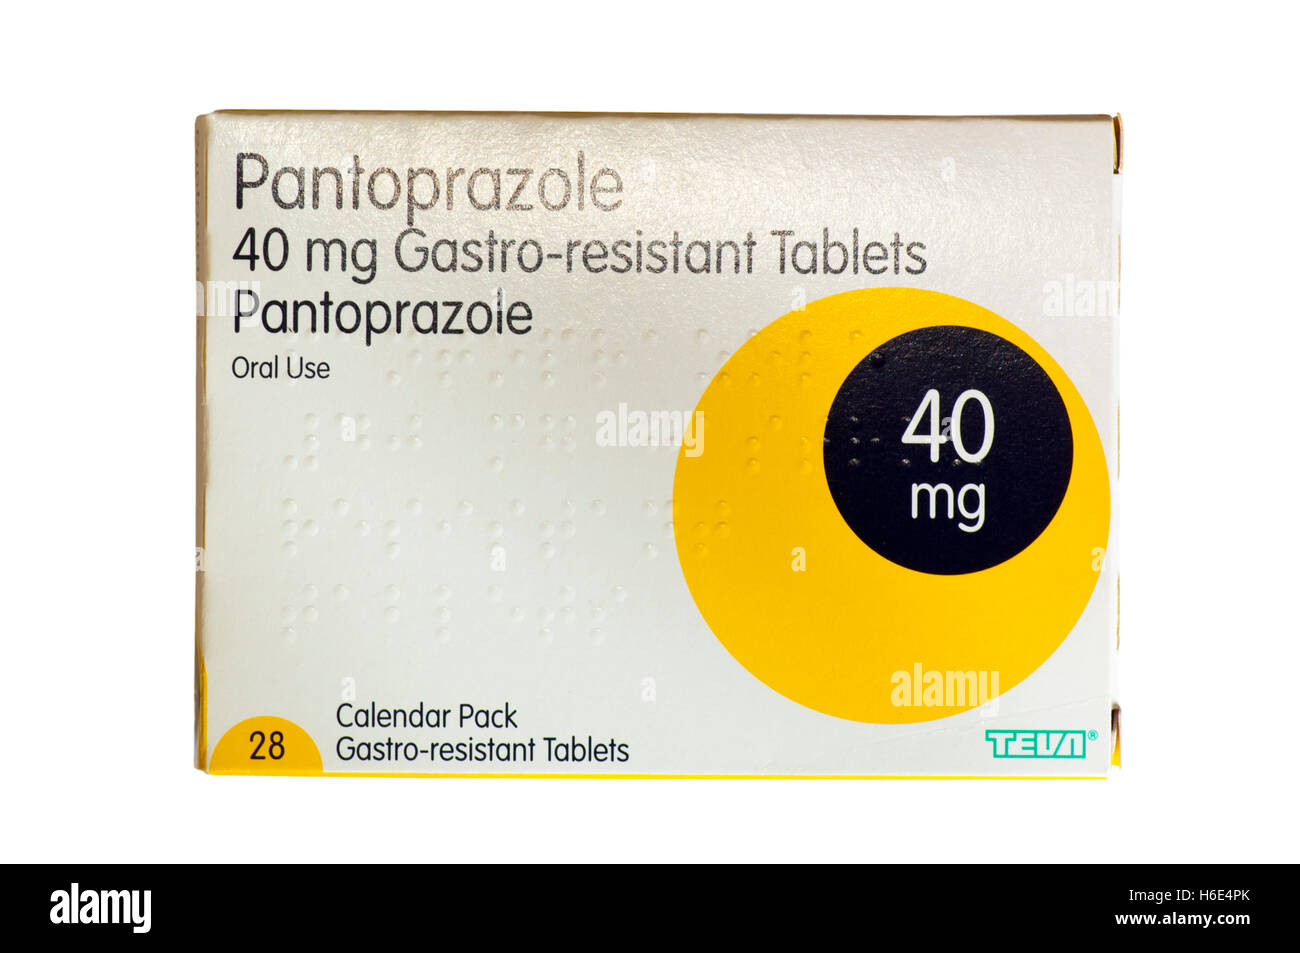 Pack Of 40mg Pantoprazole 40mg Tablets Made by Teva Stock Photo - Alamy